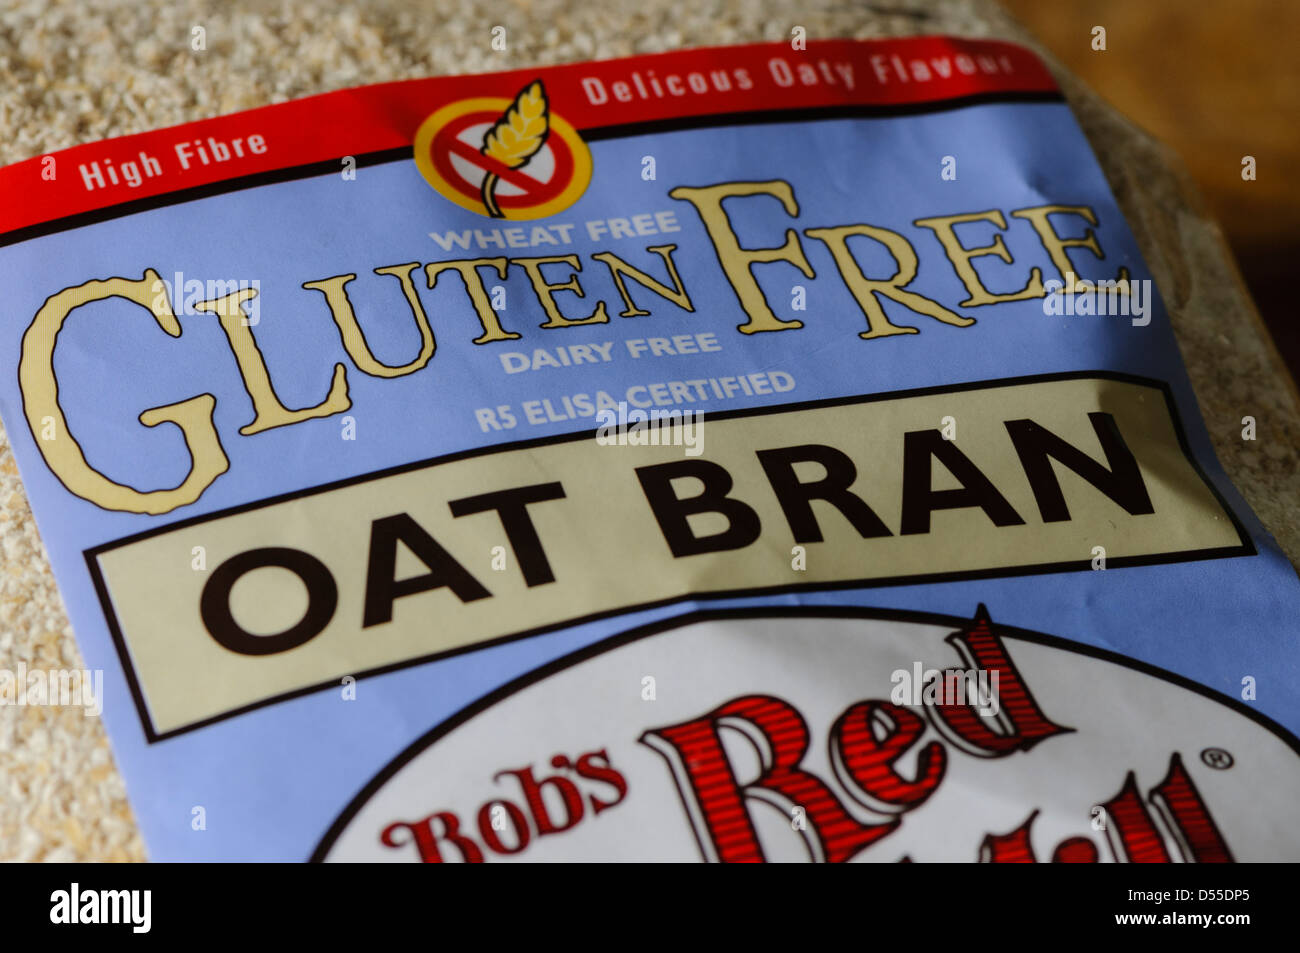 Gluten free and dairy free oat bran Stock Photo